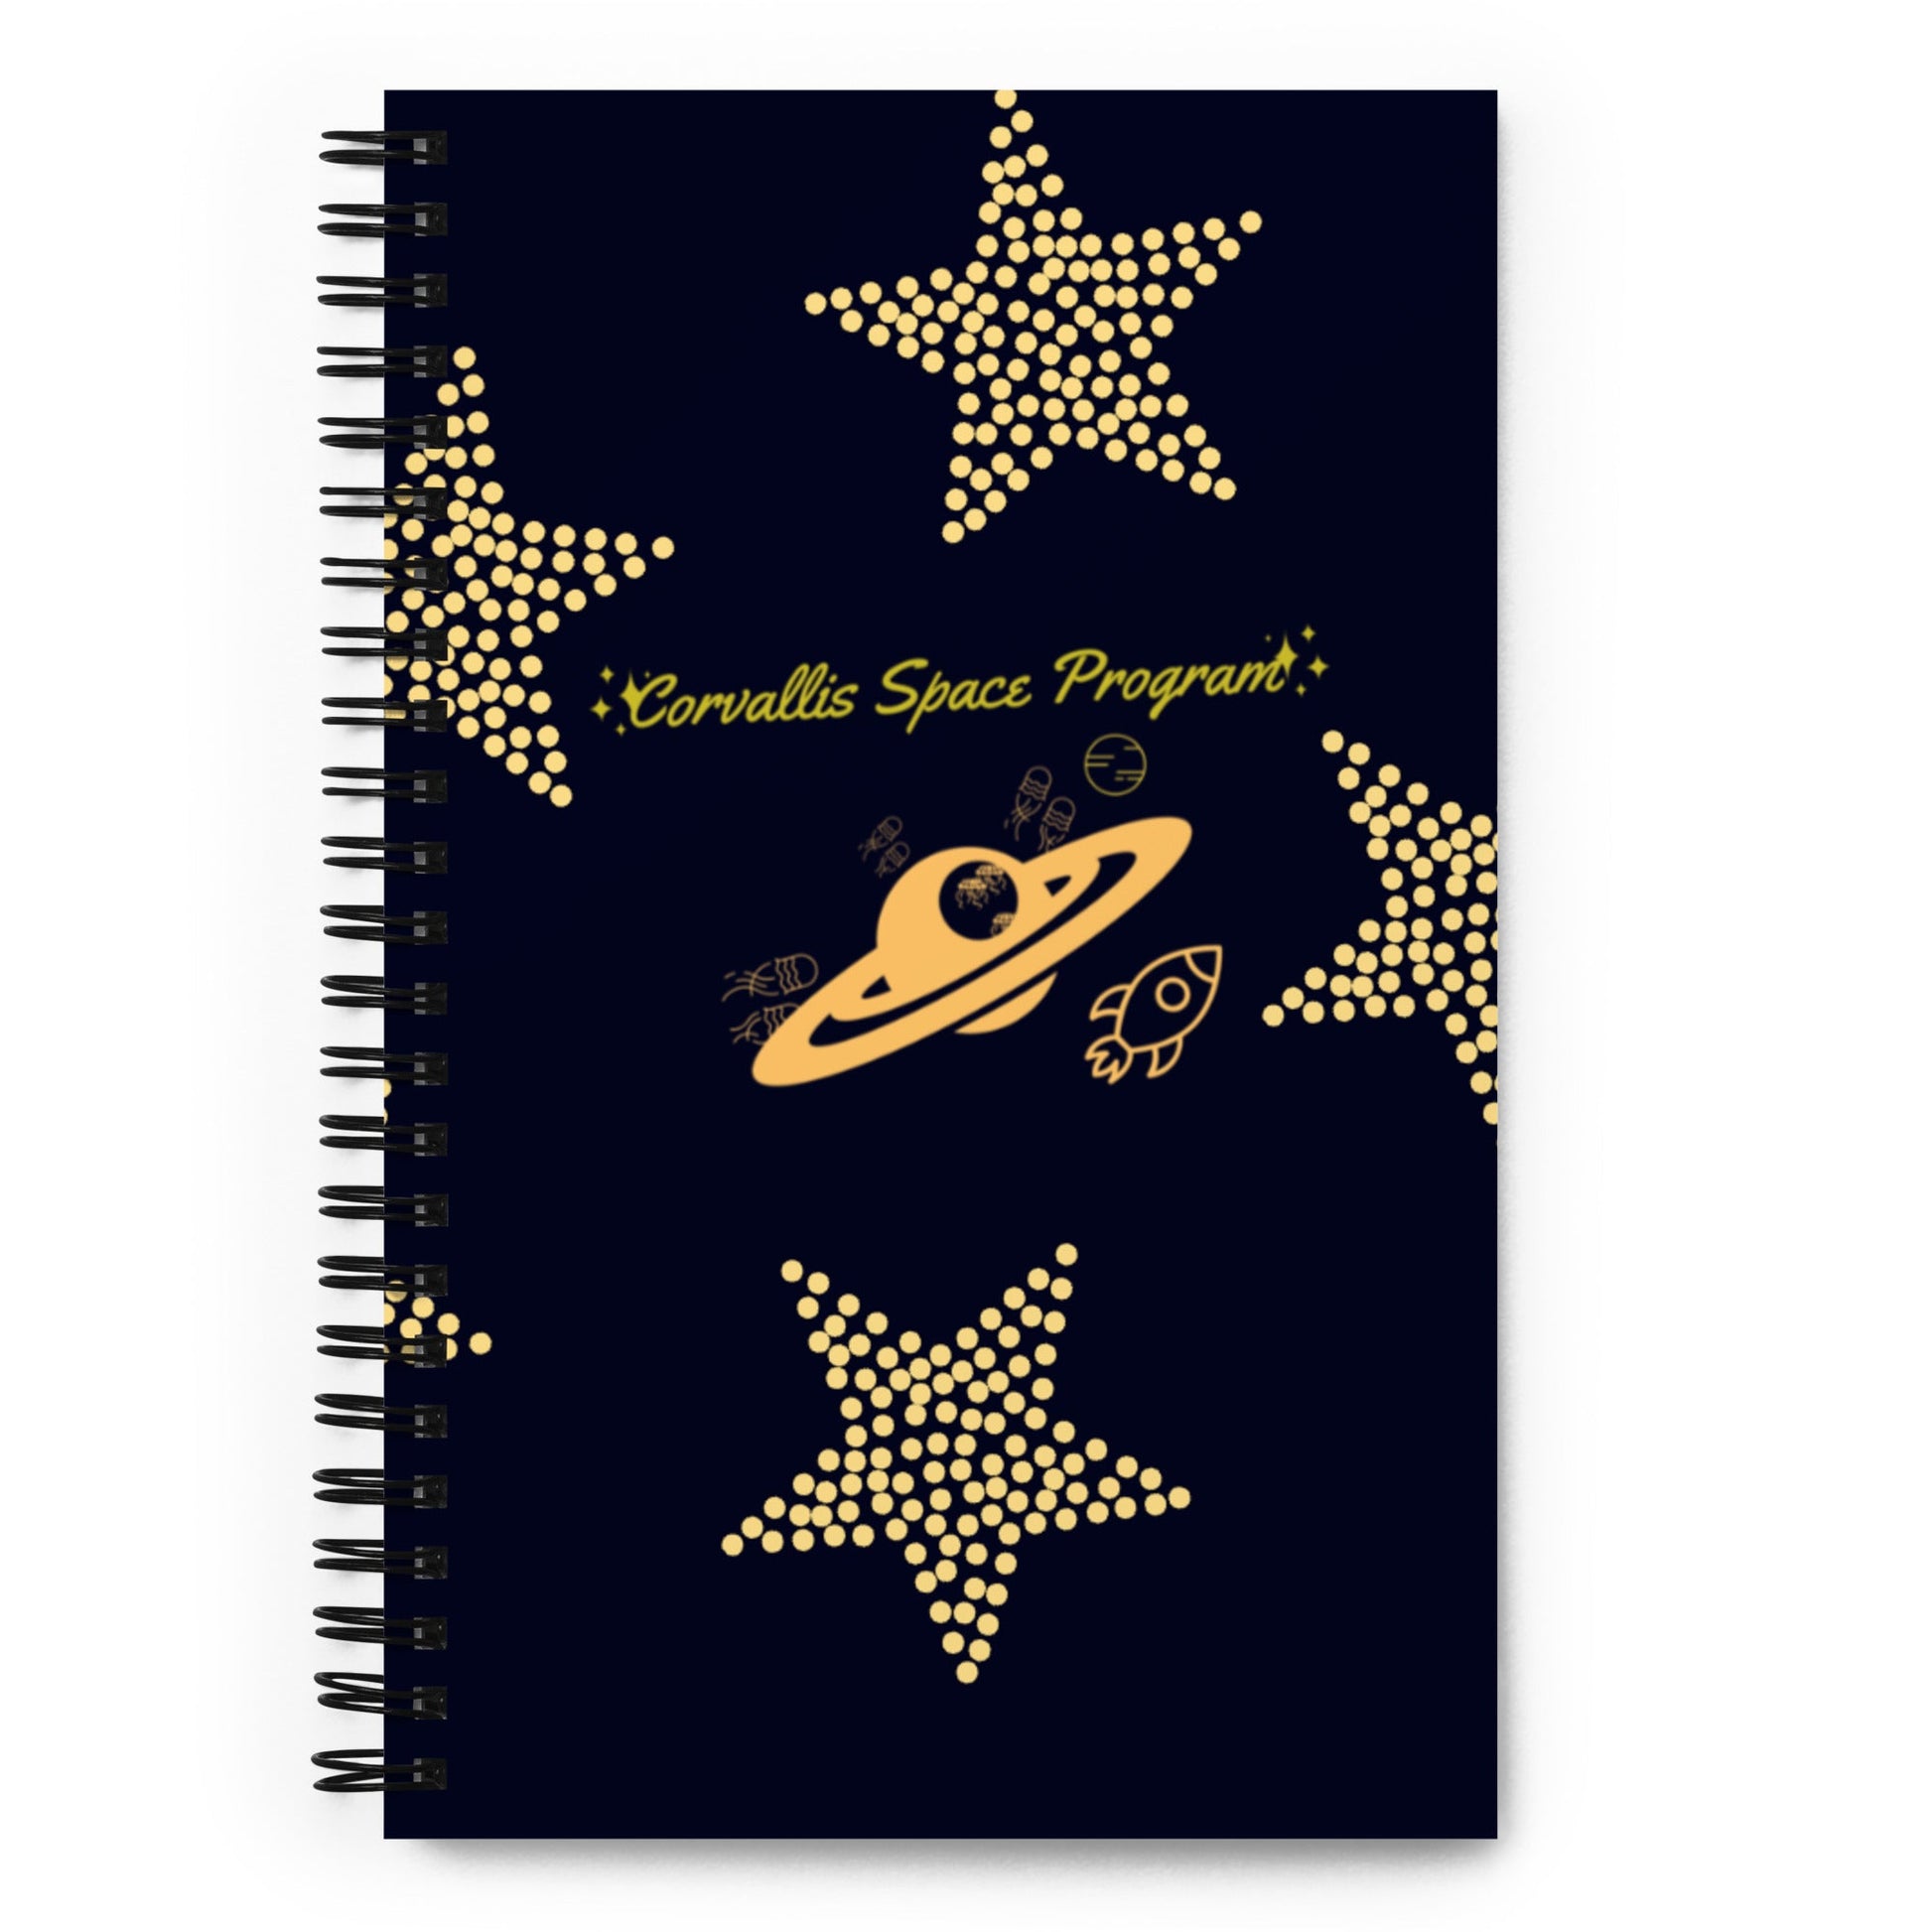 Corvallis Space Program - Spiral notebook - Science Label